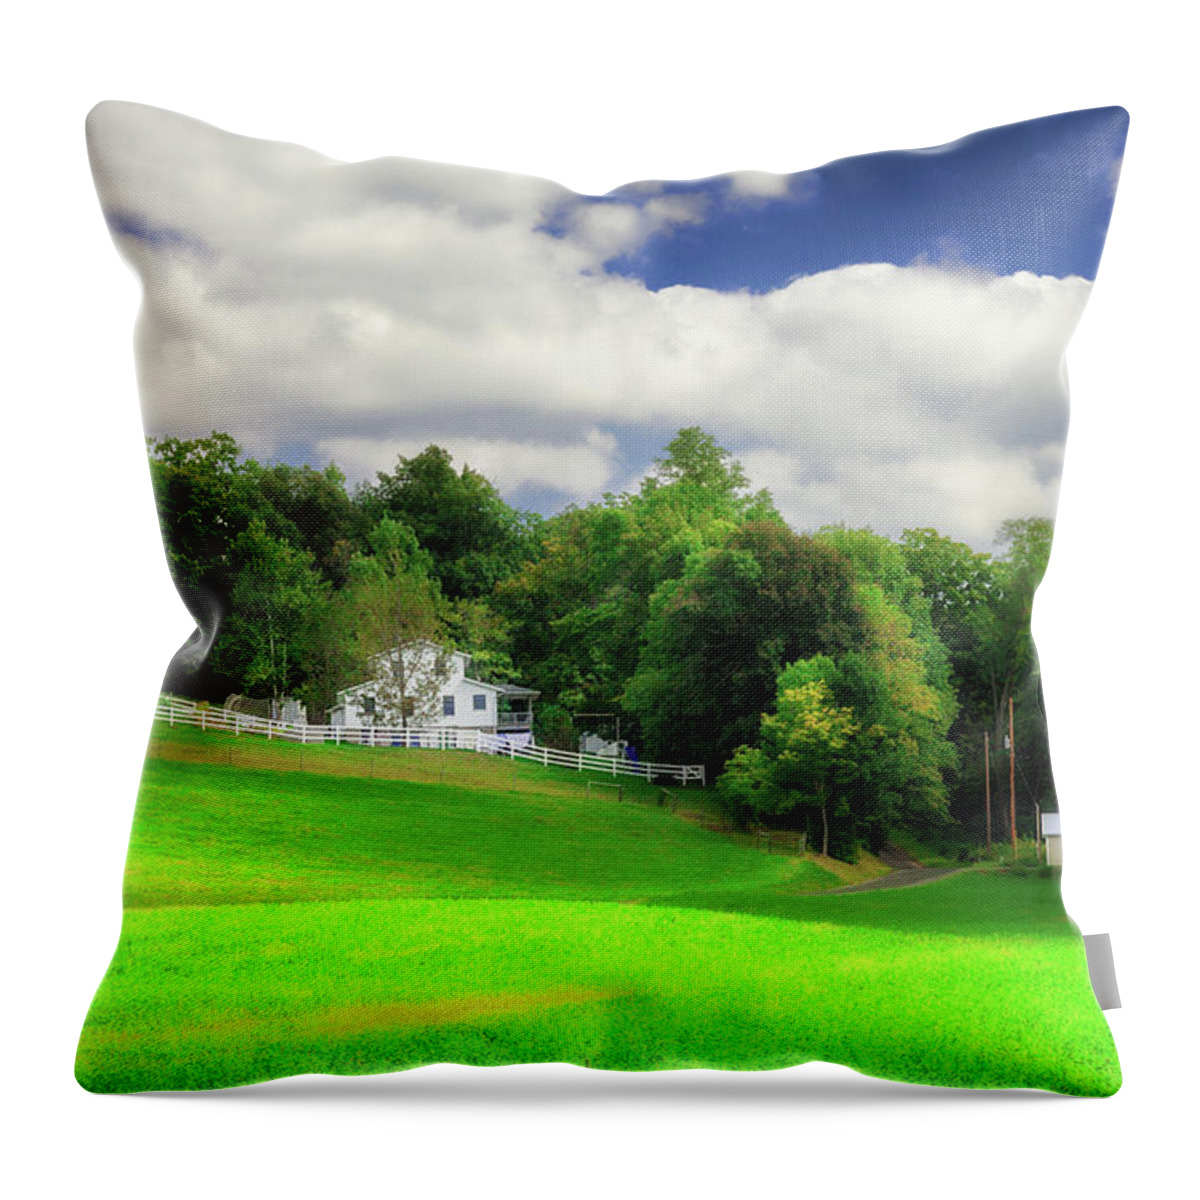 Landscape Throw Pillow featuring the photograph Farmland by Tom Mc Nemar